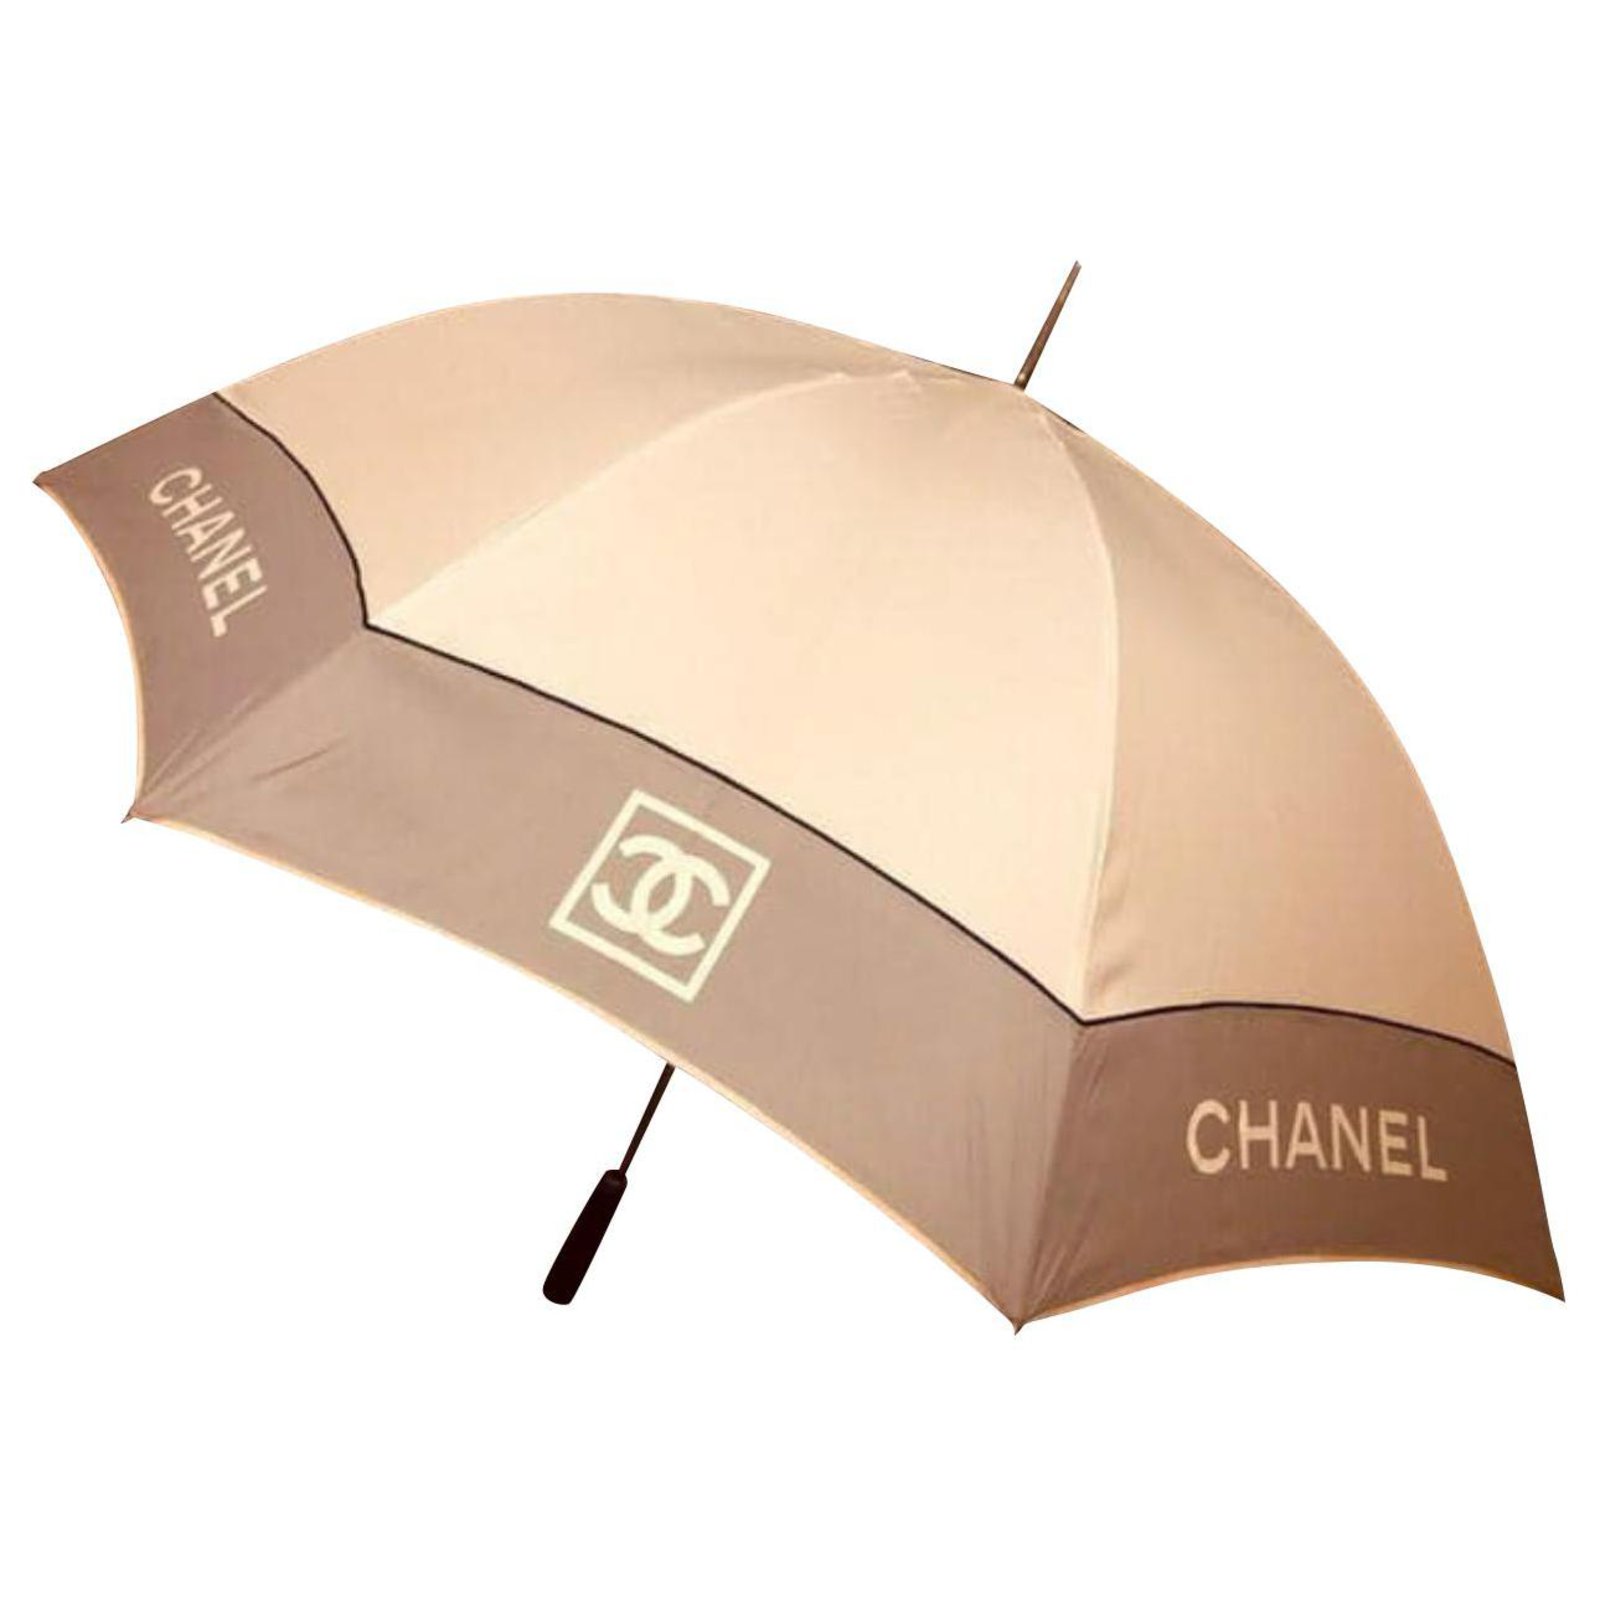 Chanel Umbrella 